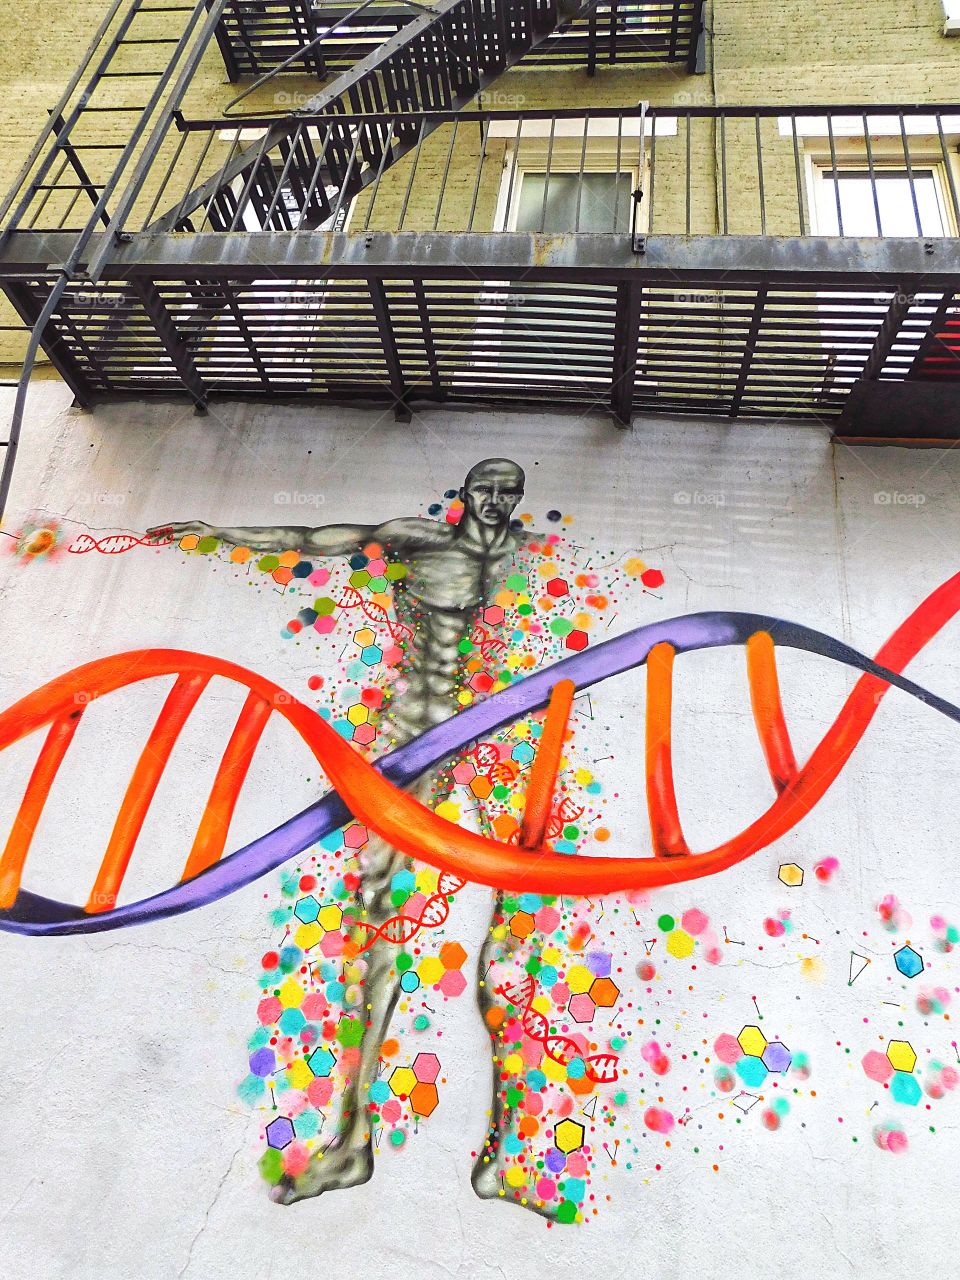 Midtown East mural of DNA